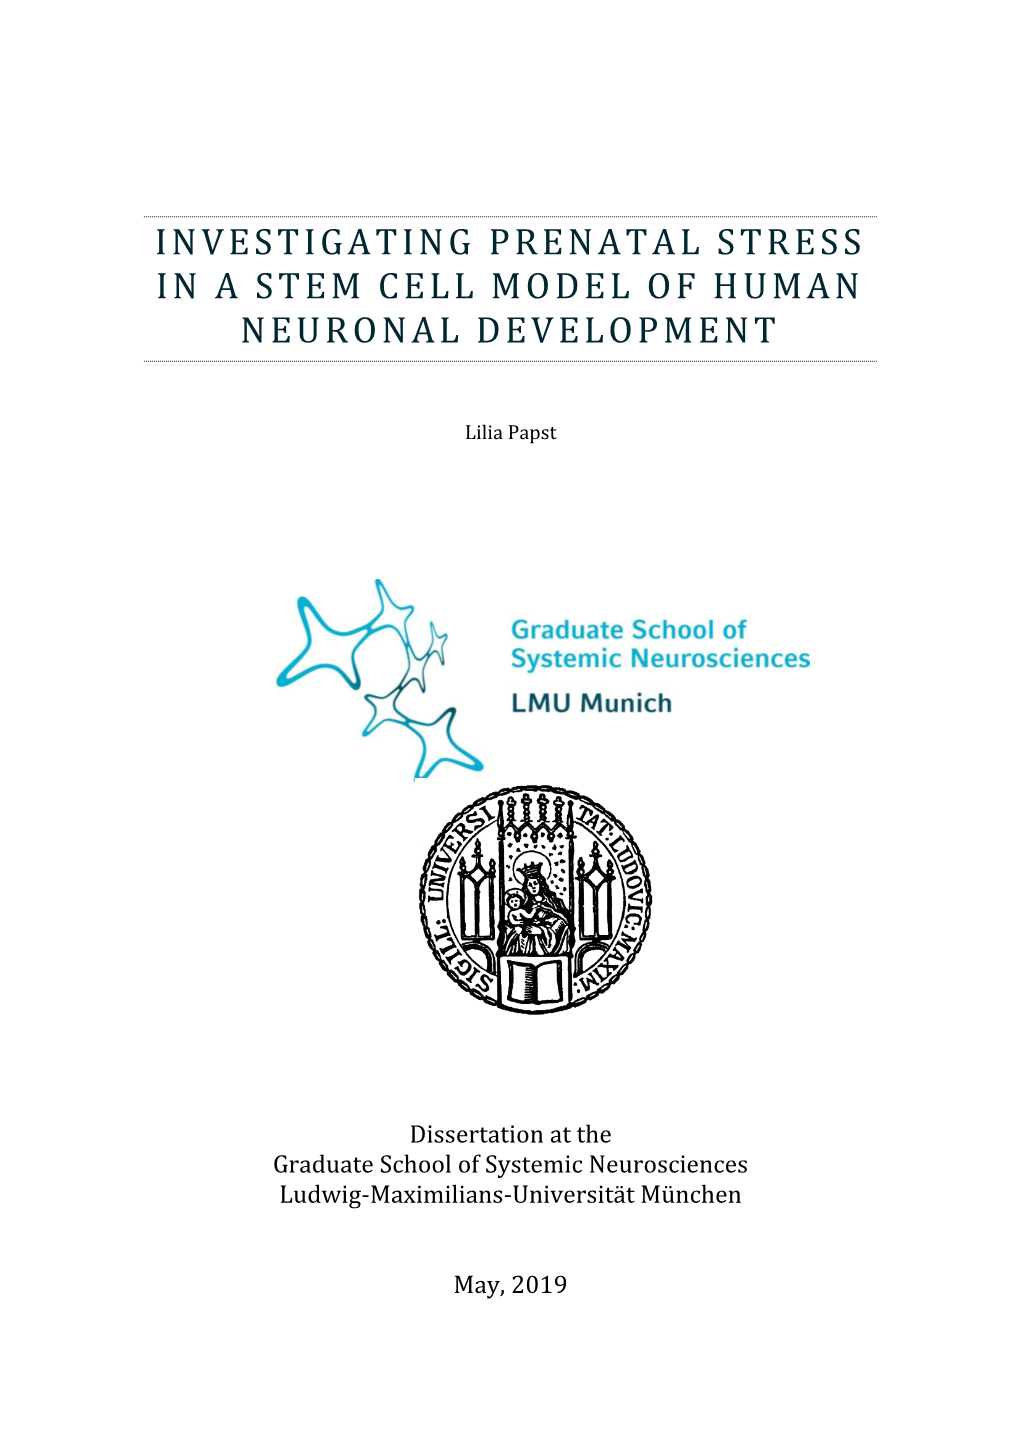 Investigating Prenatal Stress in a Stem Cell Model of Human Neuronal Development